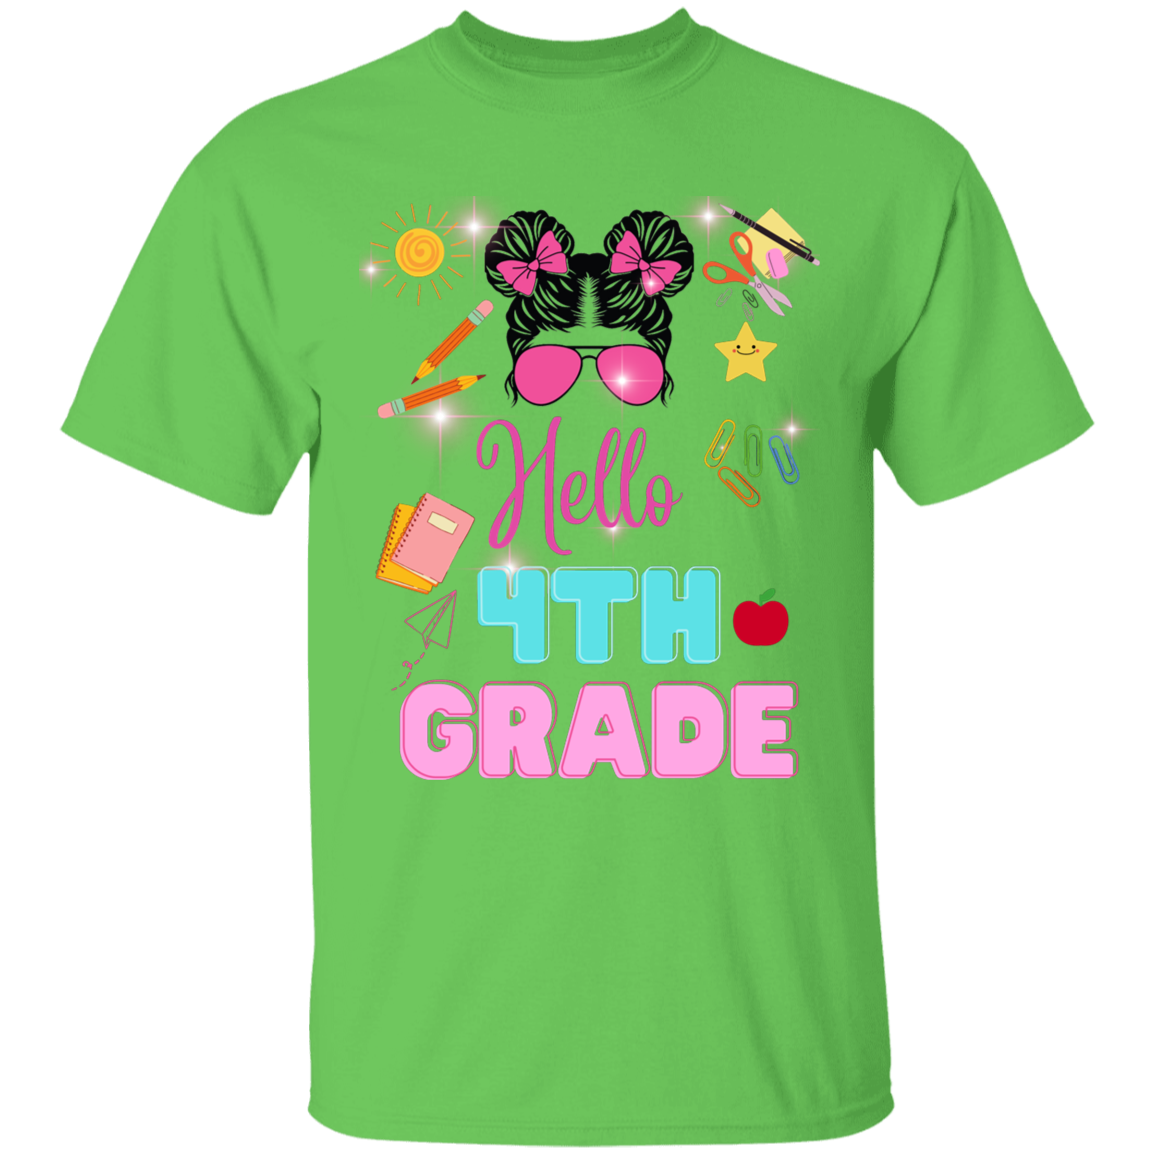 Girls back-to-school 4th grade t-shirts .Back-to-school clothing . Trendy back-to-school tees .Cute back-to-school shirts